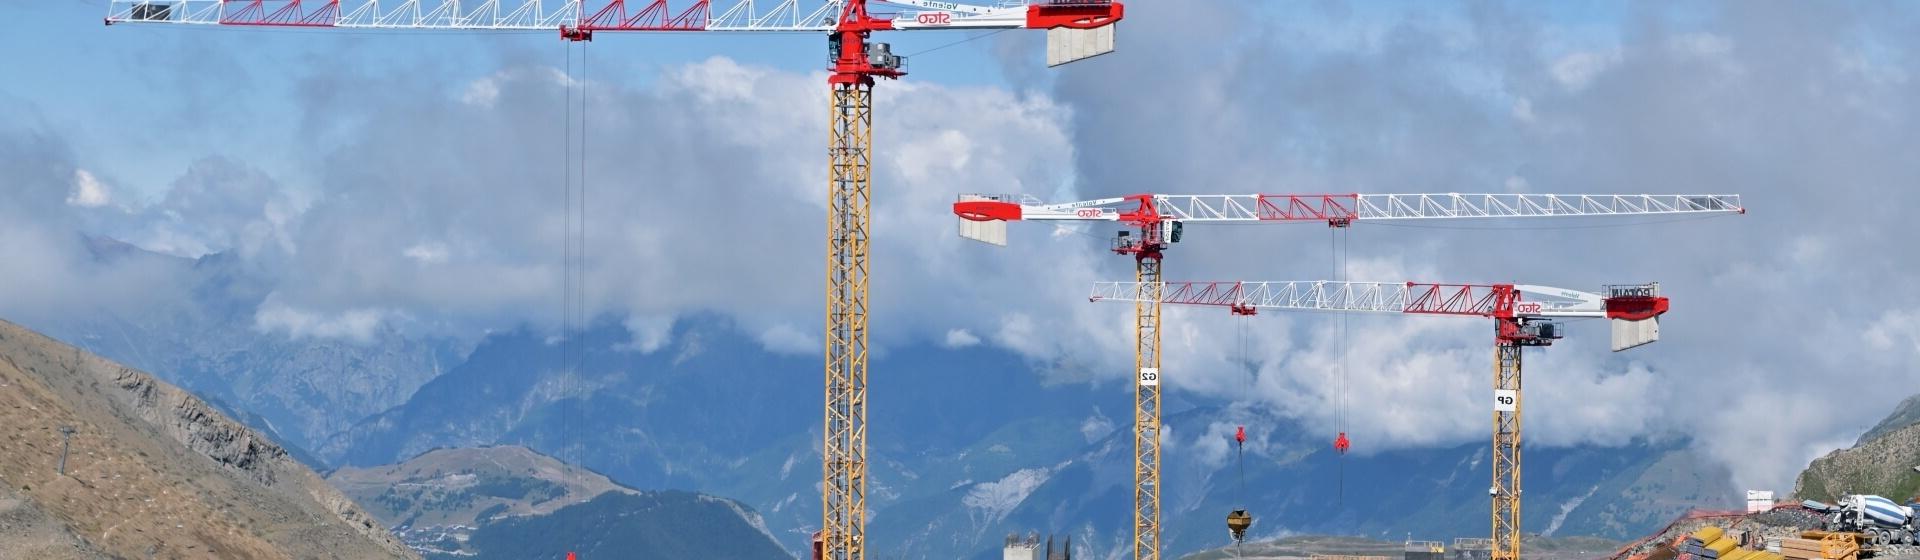 Potain-cranes-triumph-in-remote-French-Alps-cable-car-project-01.jpg